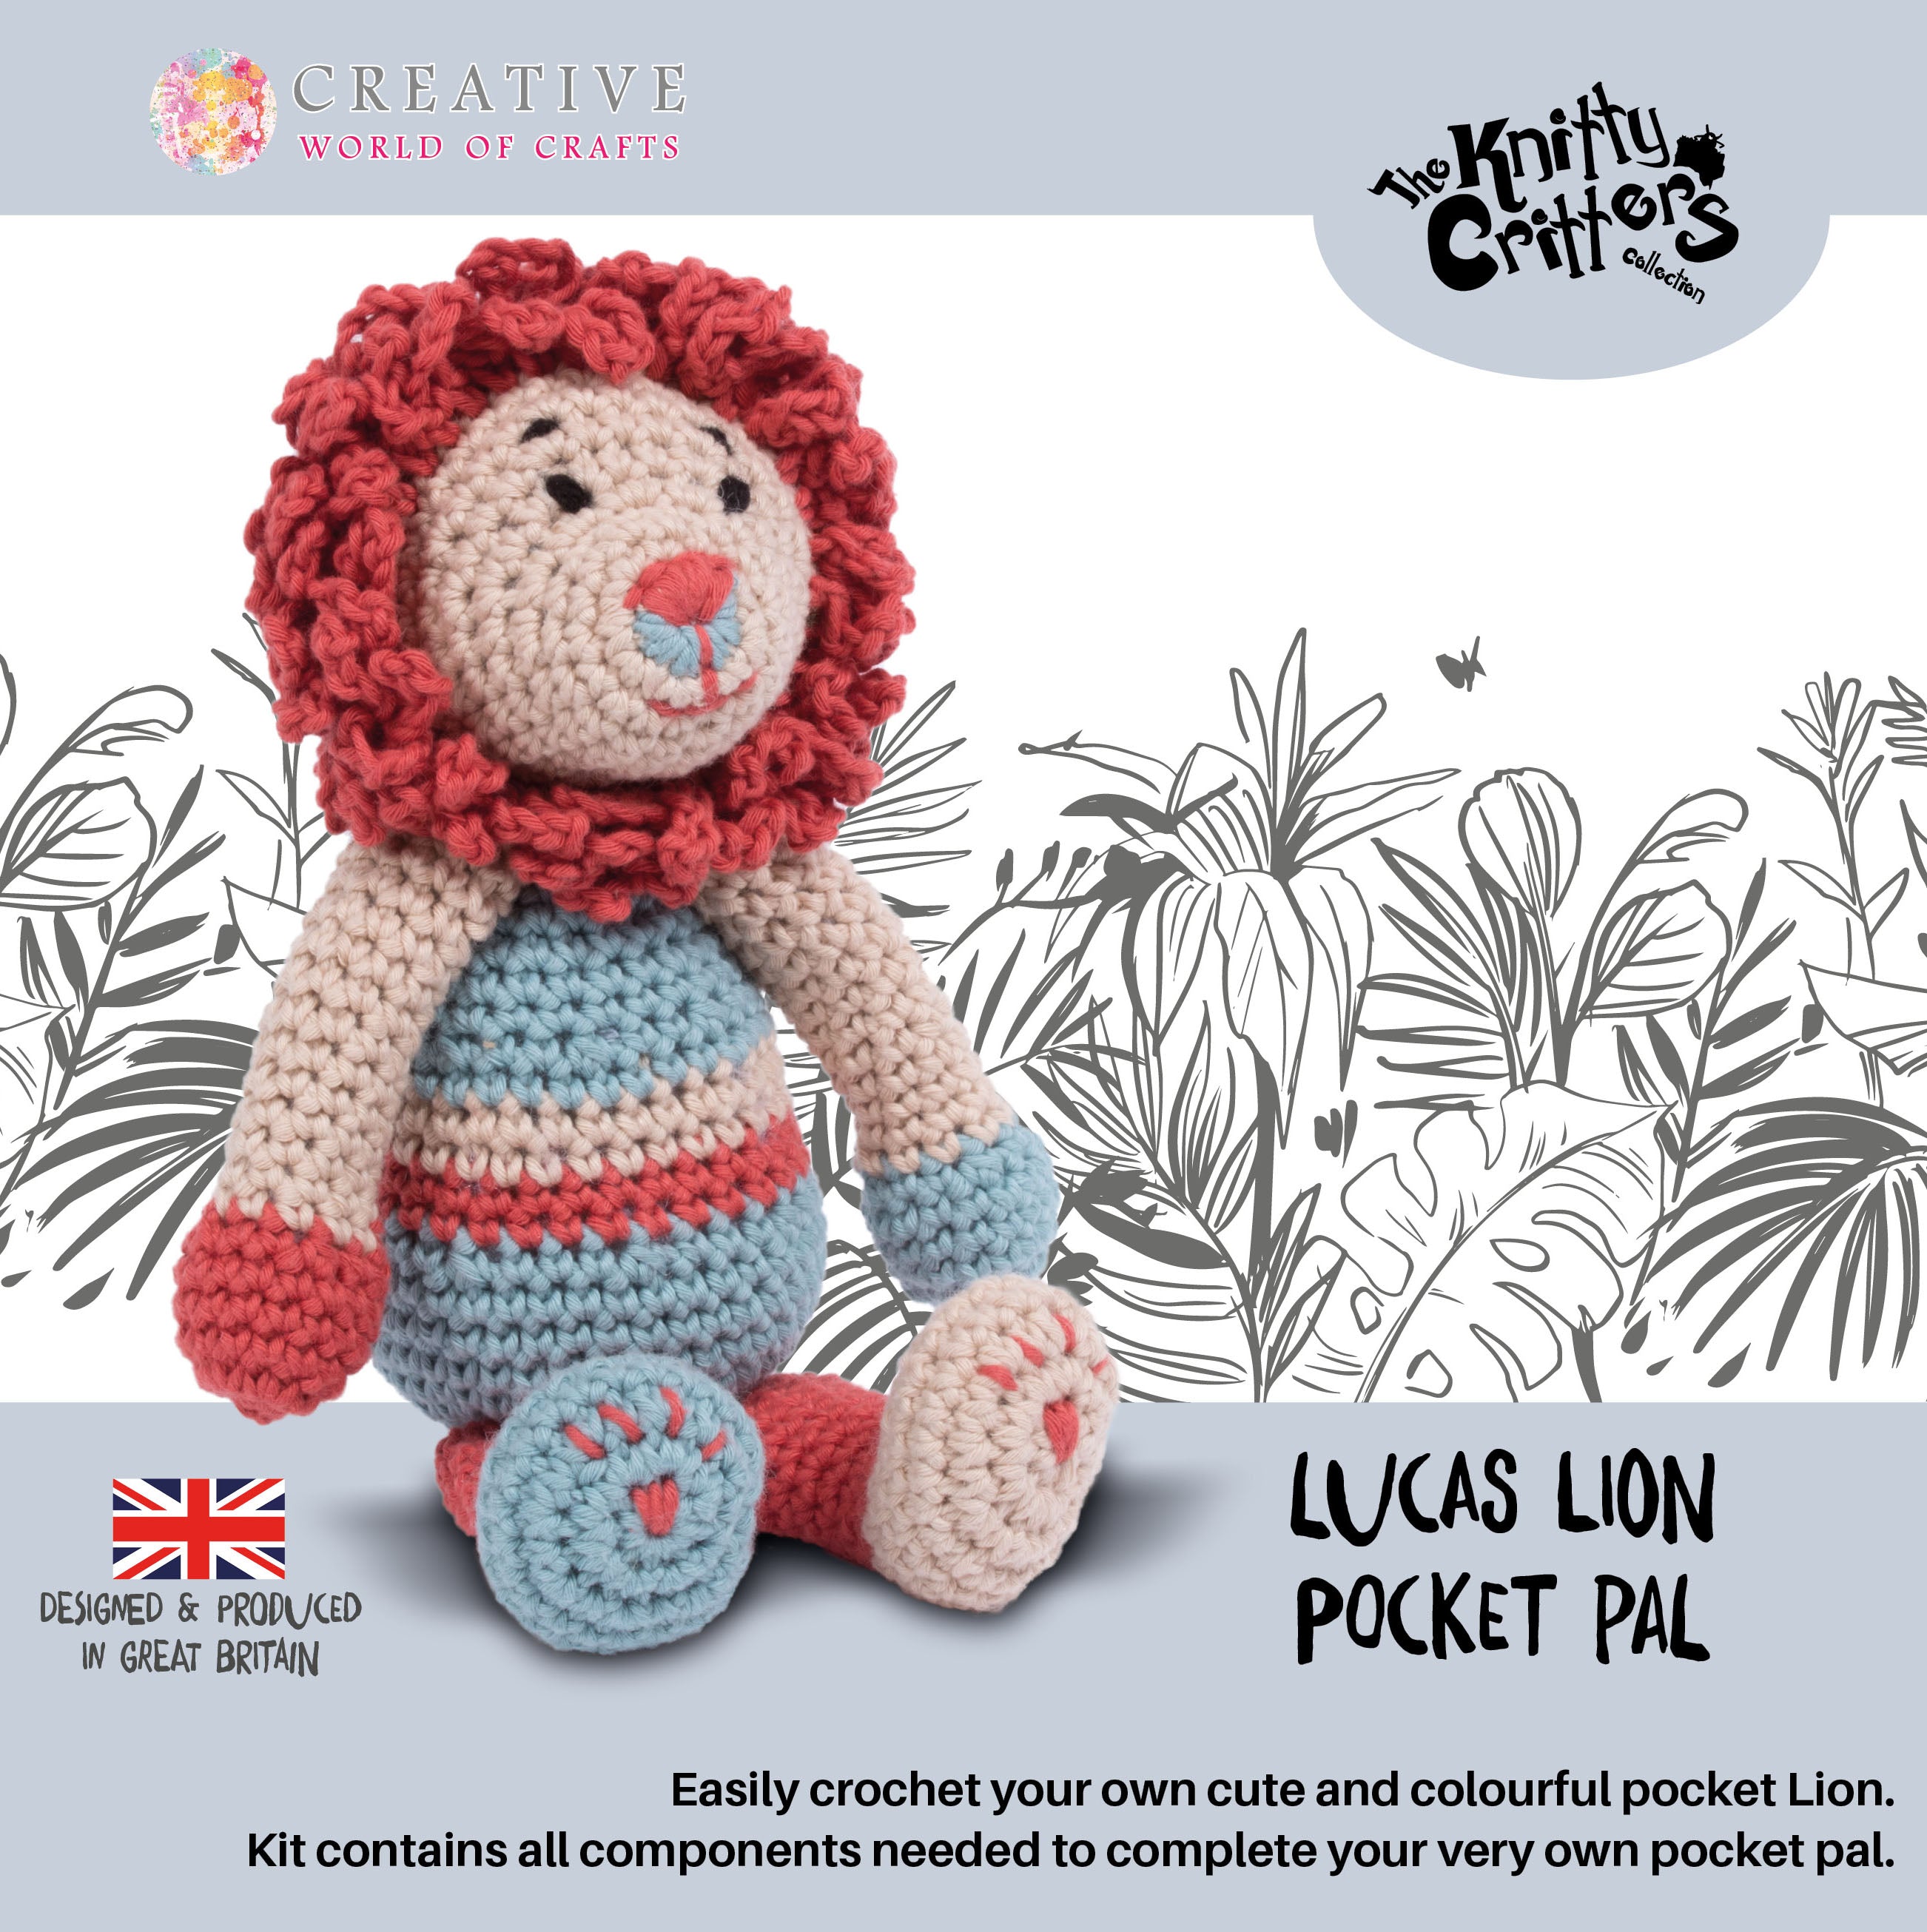 Knitty Critters Pocket Pals – Lucas Lion